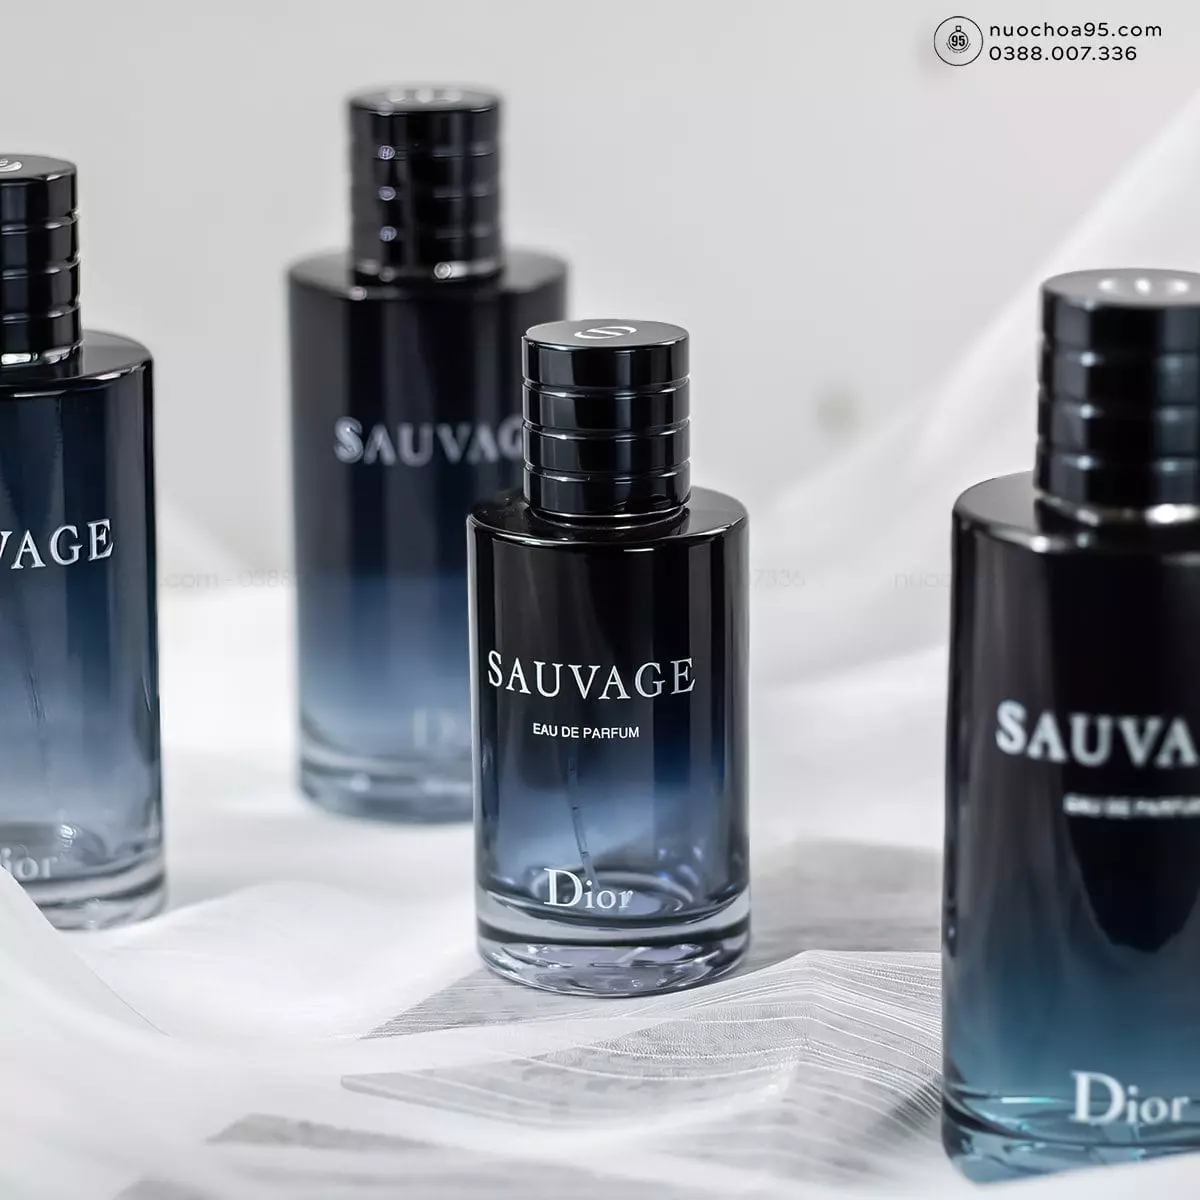 Nước hoa Sauvage Dior Eau de Parfum - Ảnh 4